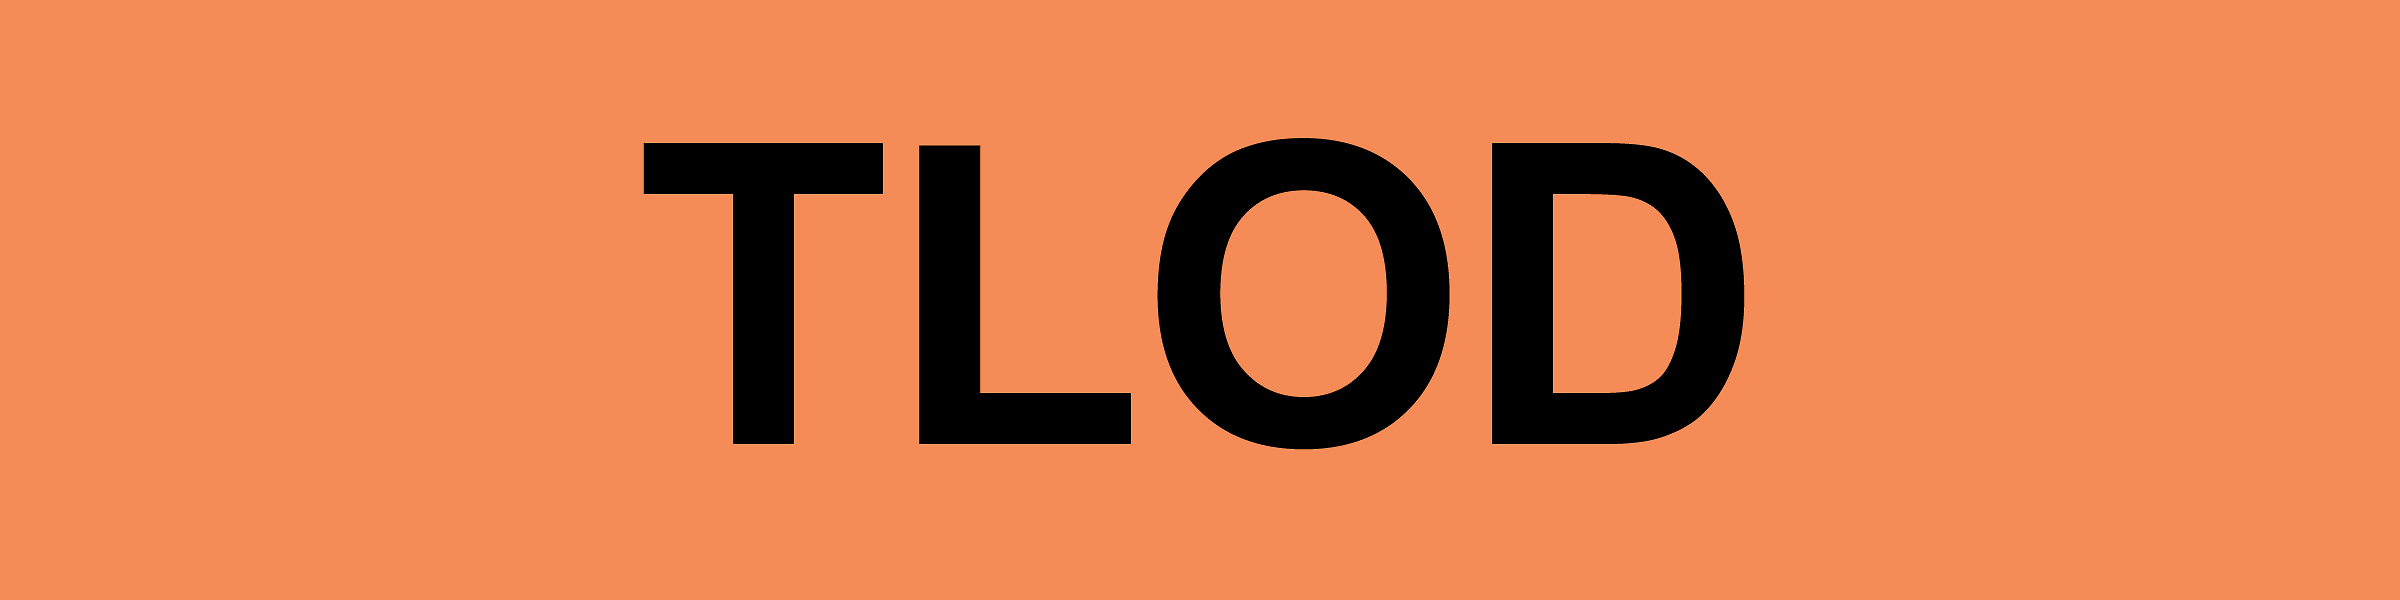 Tlod Logo - tlod: Recent Art, Design & Photography | Redbubble